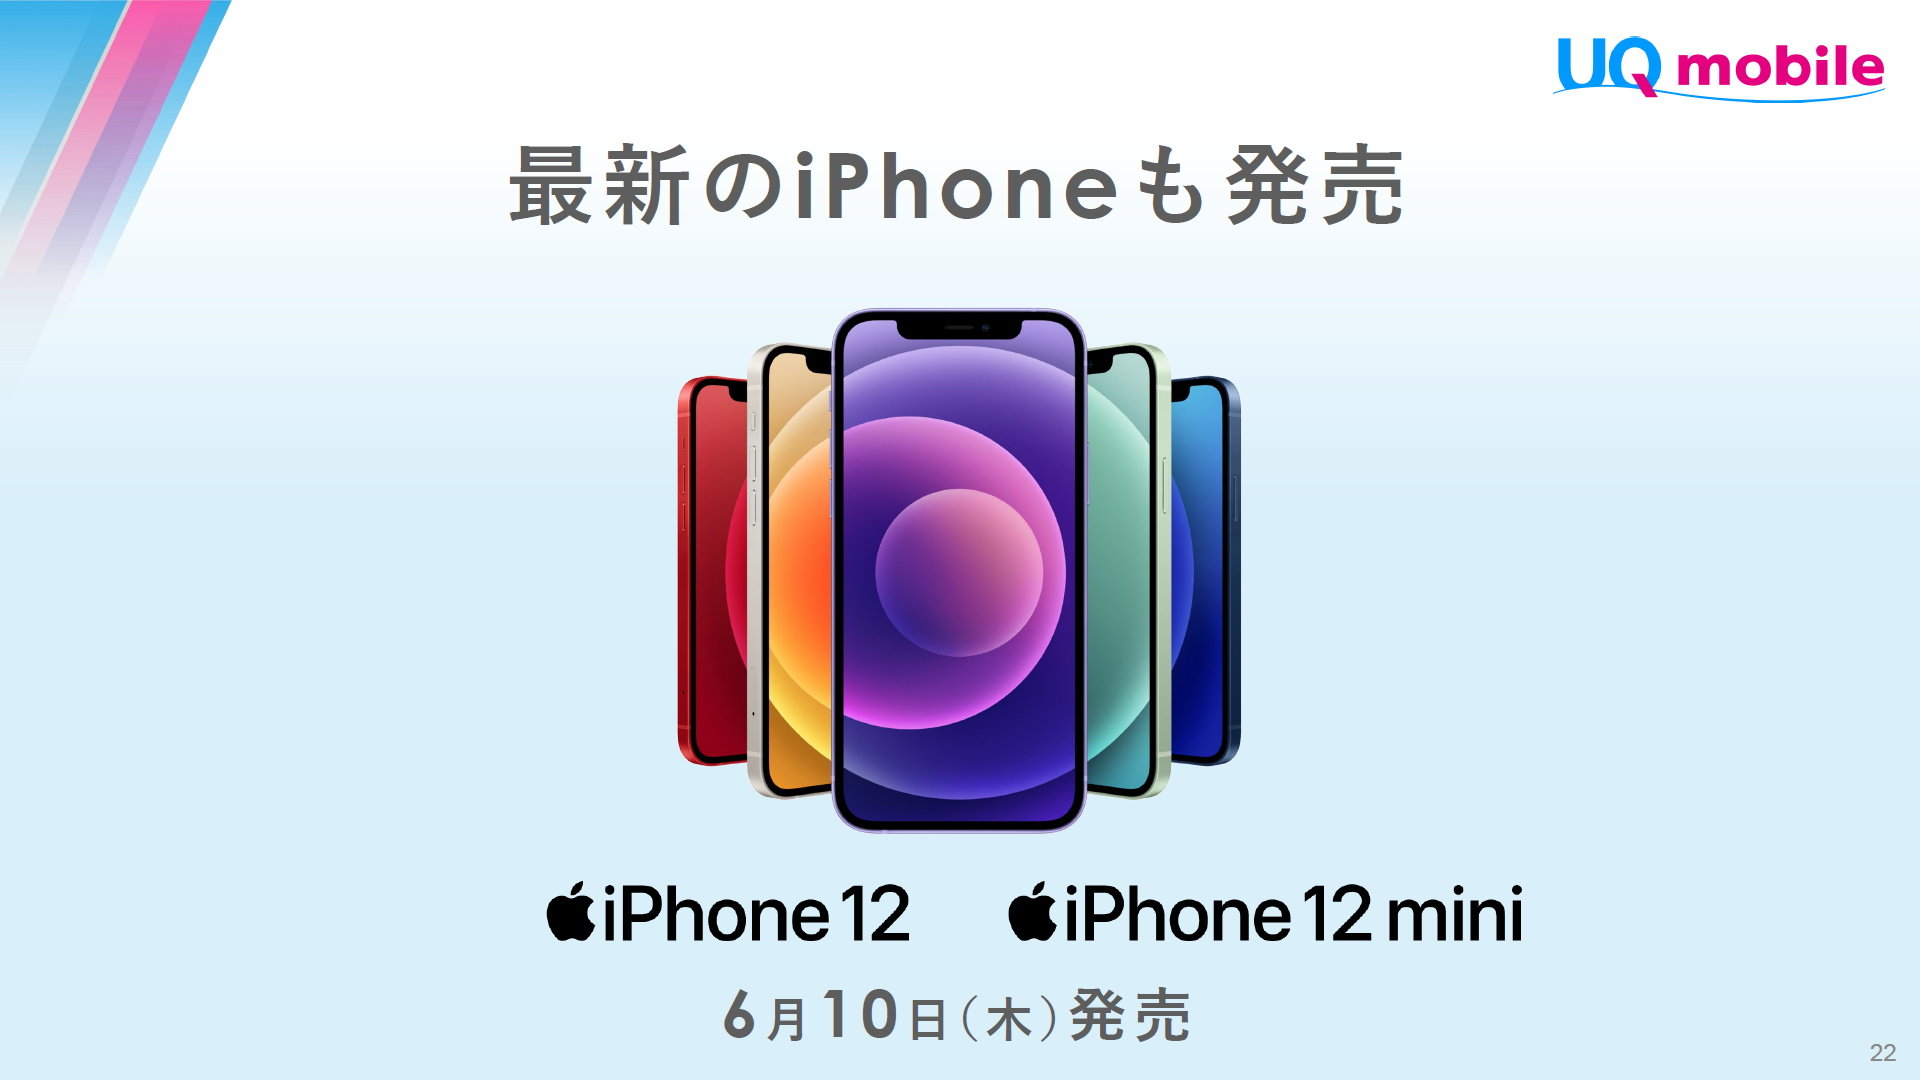 UQ mobileが「iPhone 12」「iPhone 12 mini」を取り扱い 6月10日発売